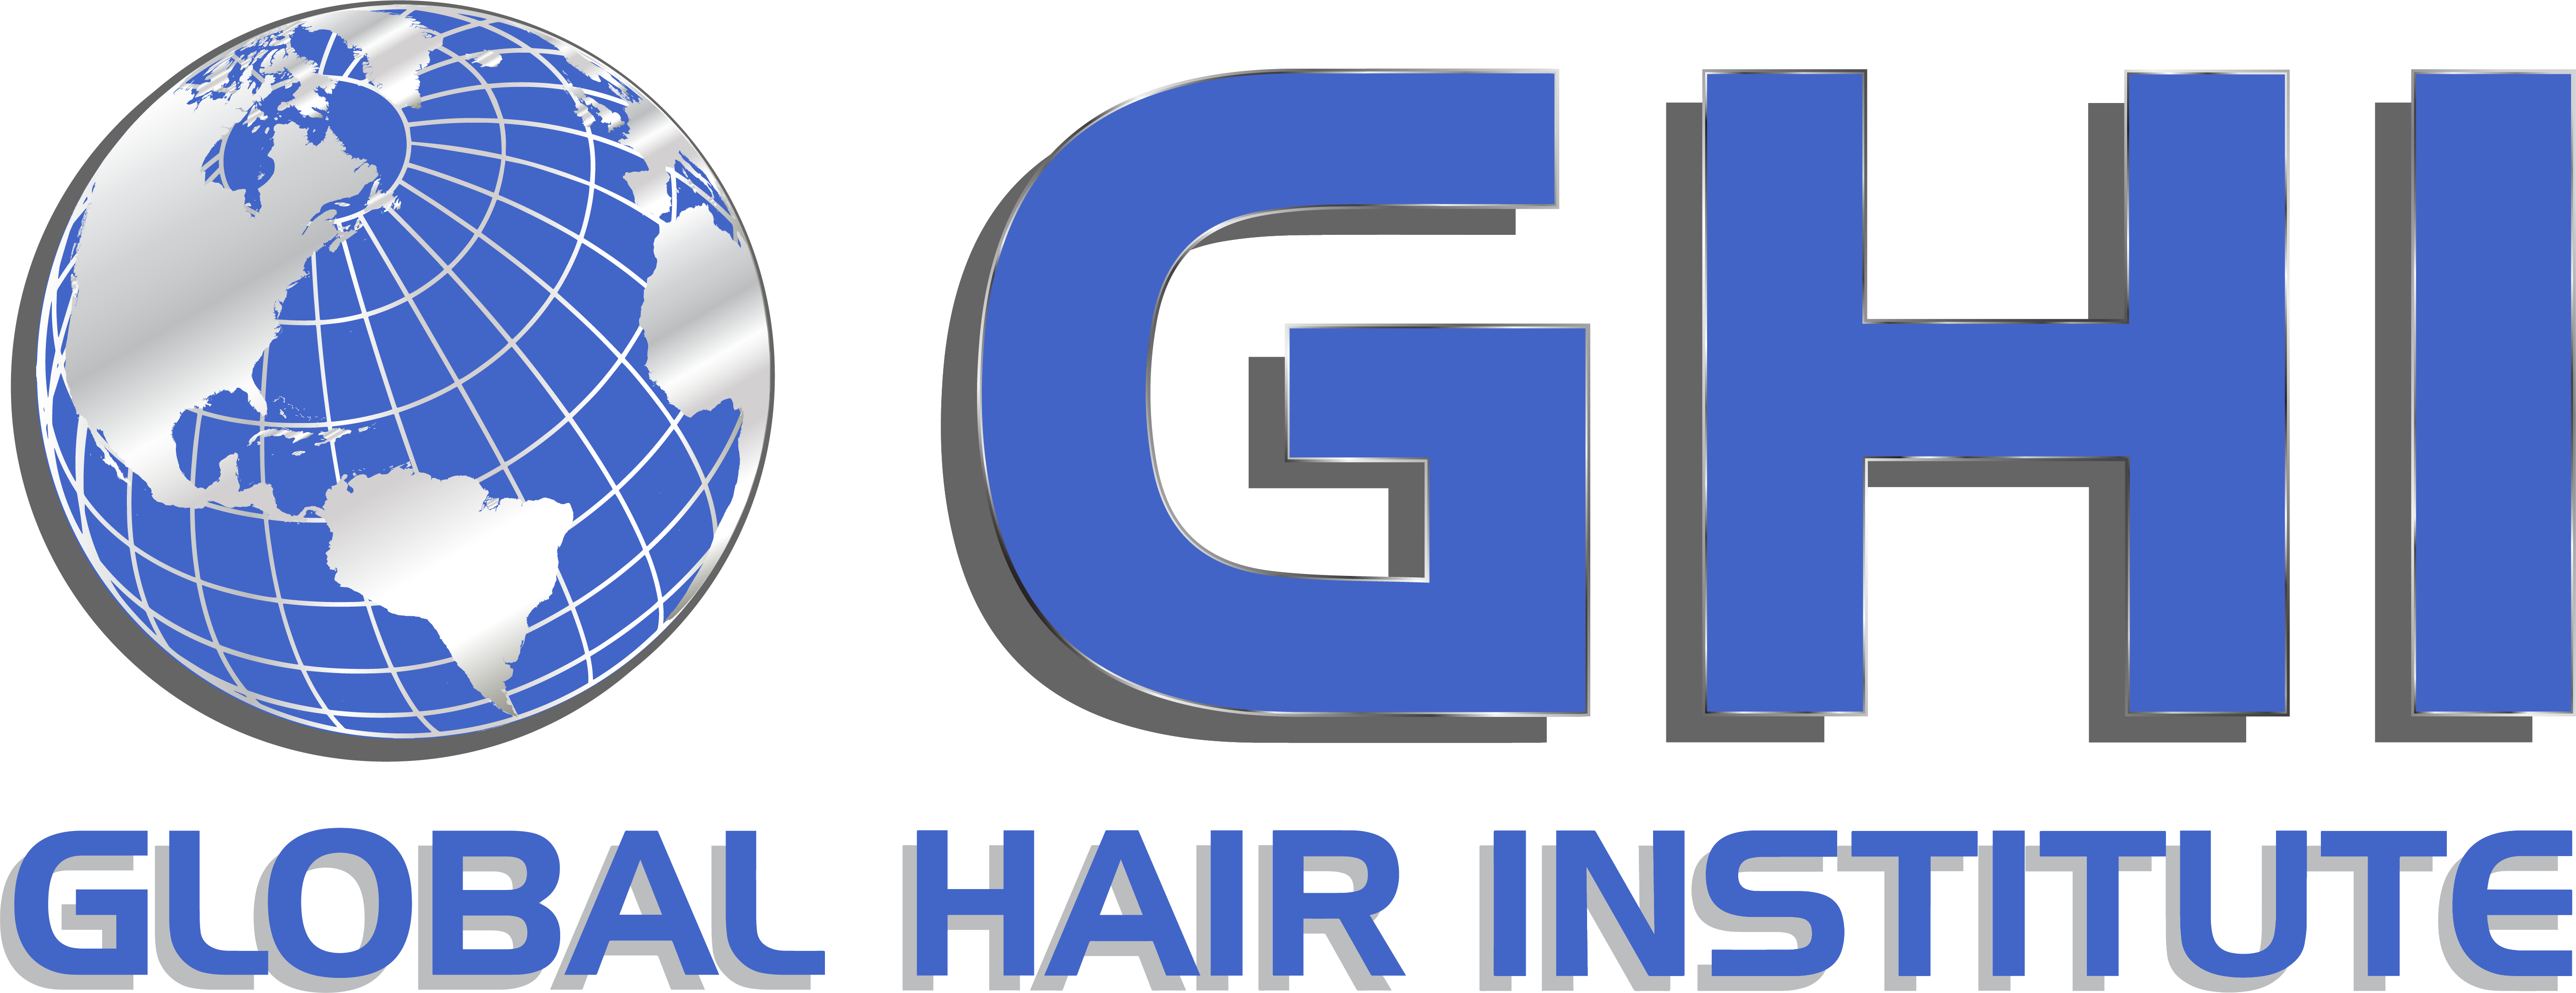 Global Hair Institute